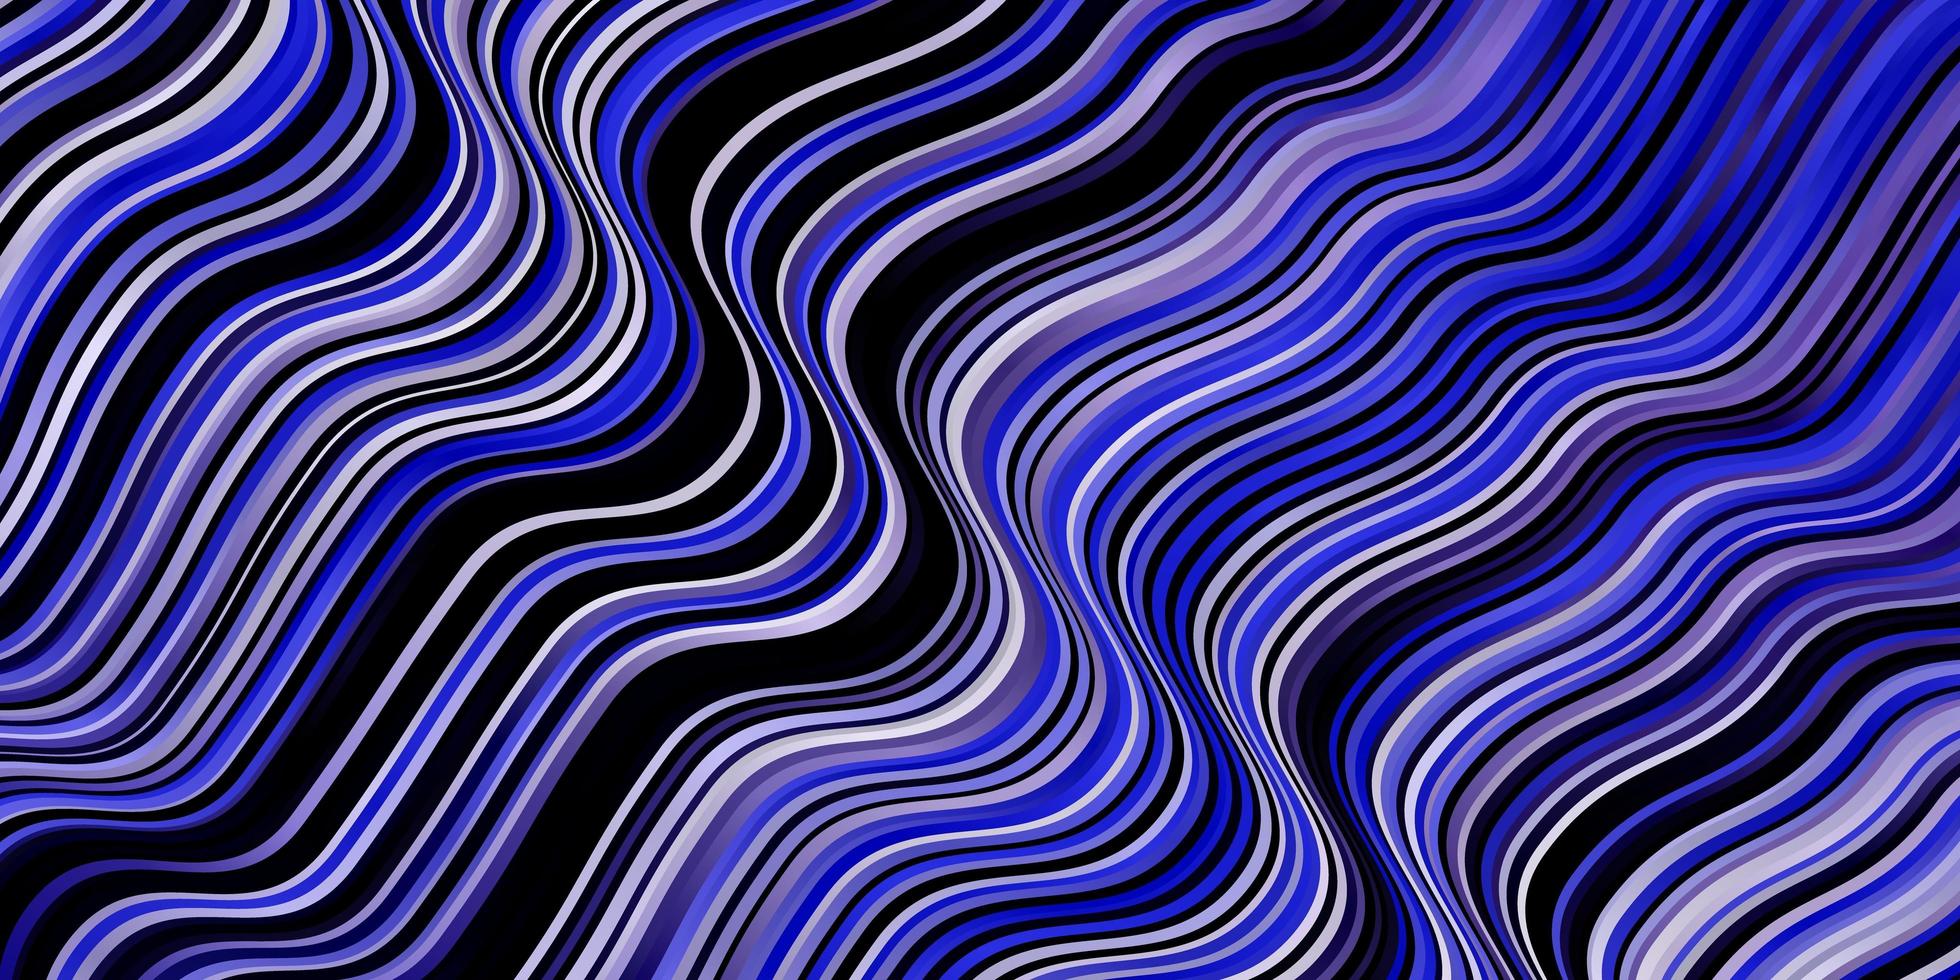 patrón de vector púrpura claro con líneas curvas.